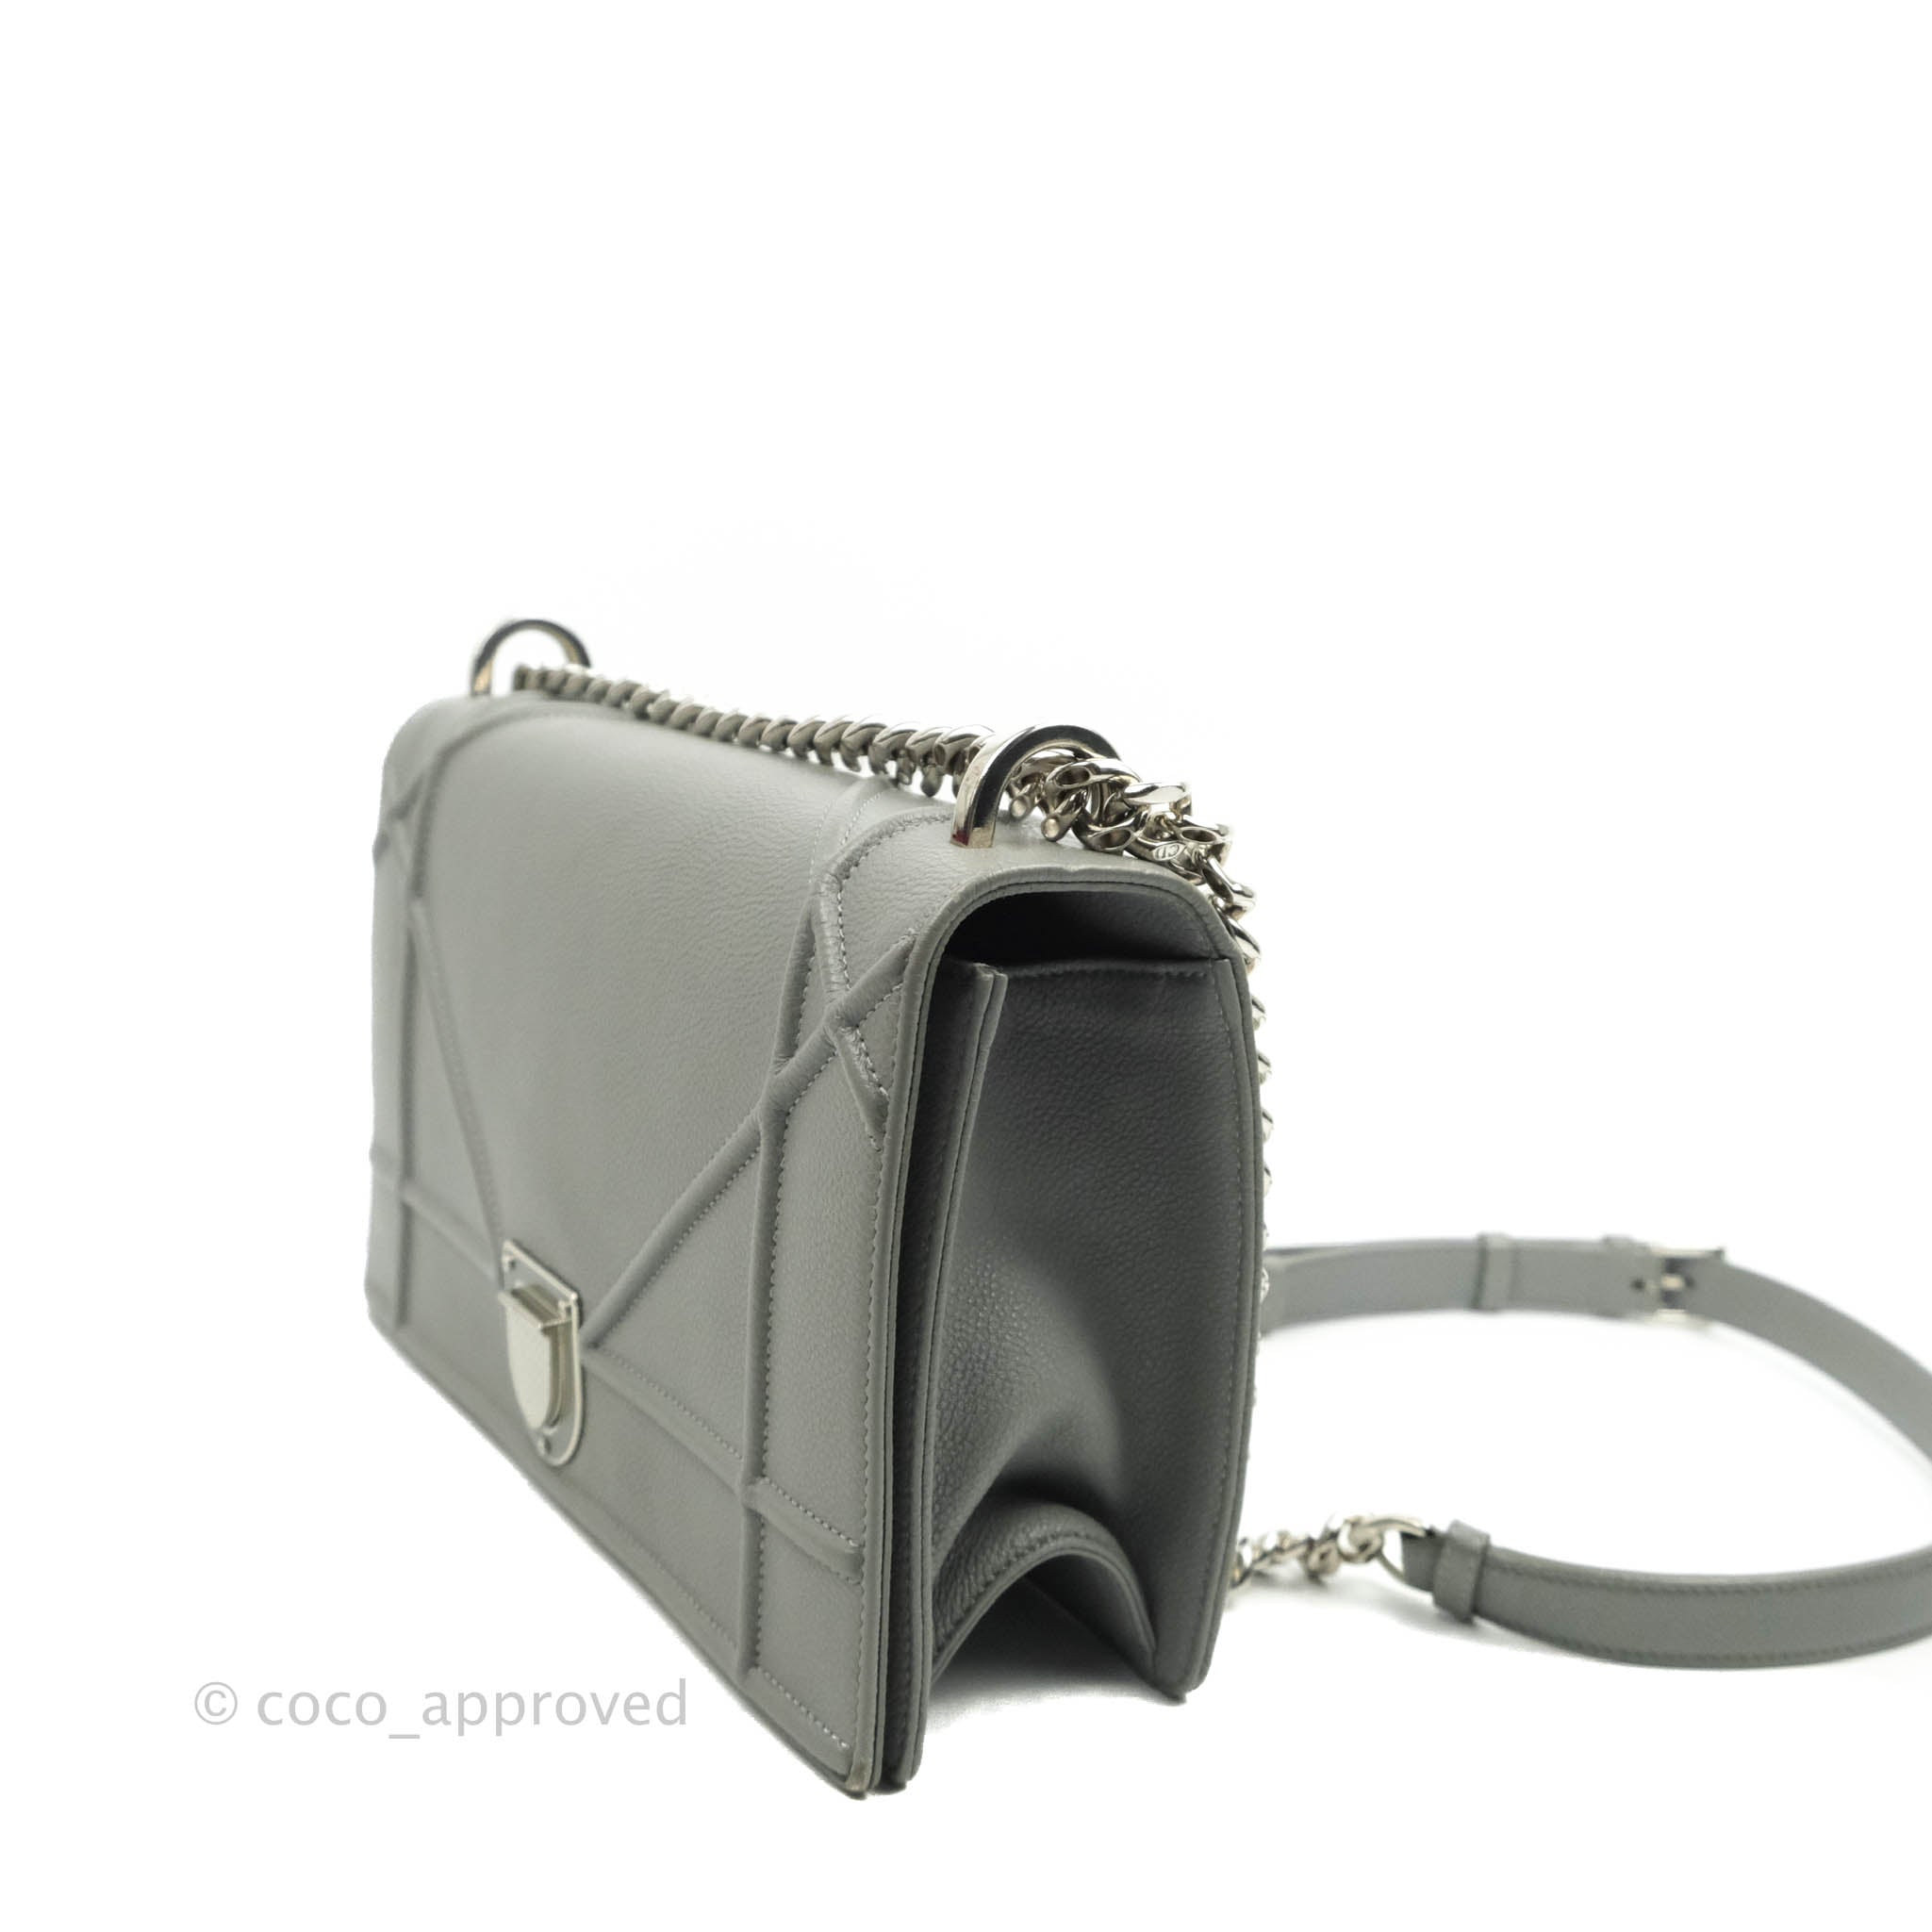 Christian Dior Medium Diorama Calfskin Flap Bag Grey Silver